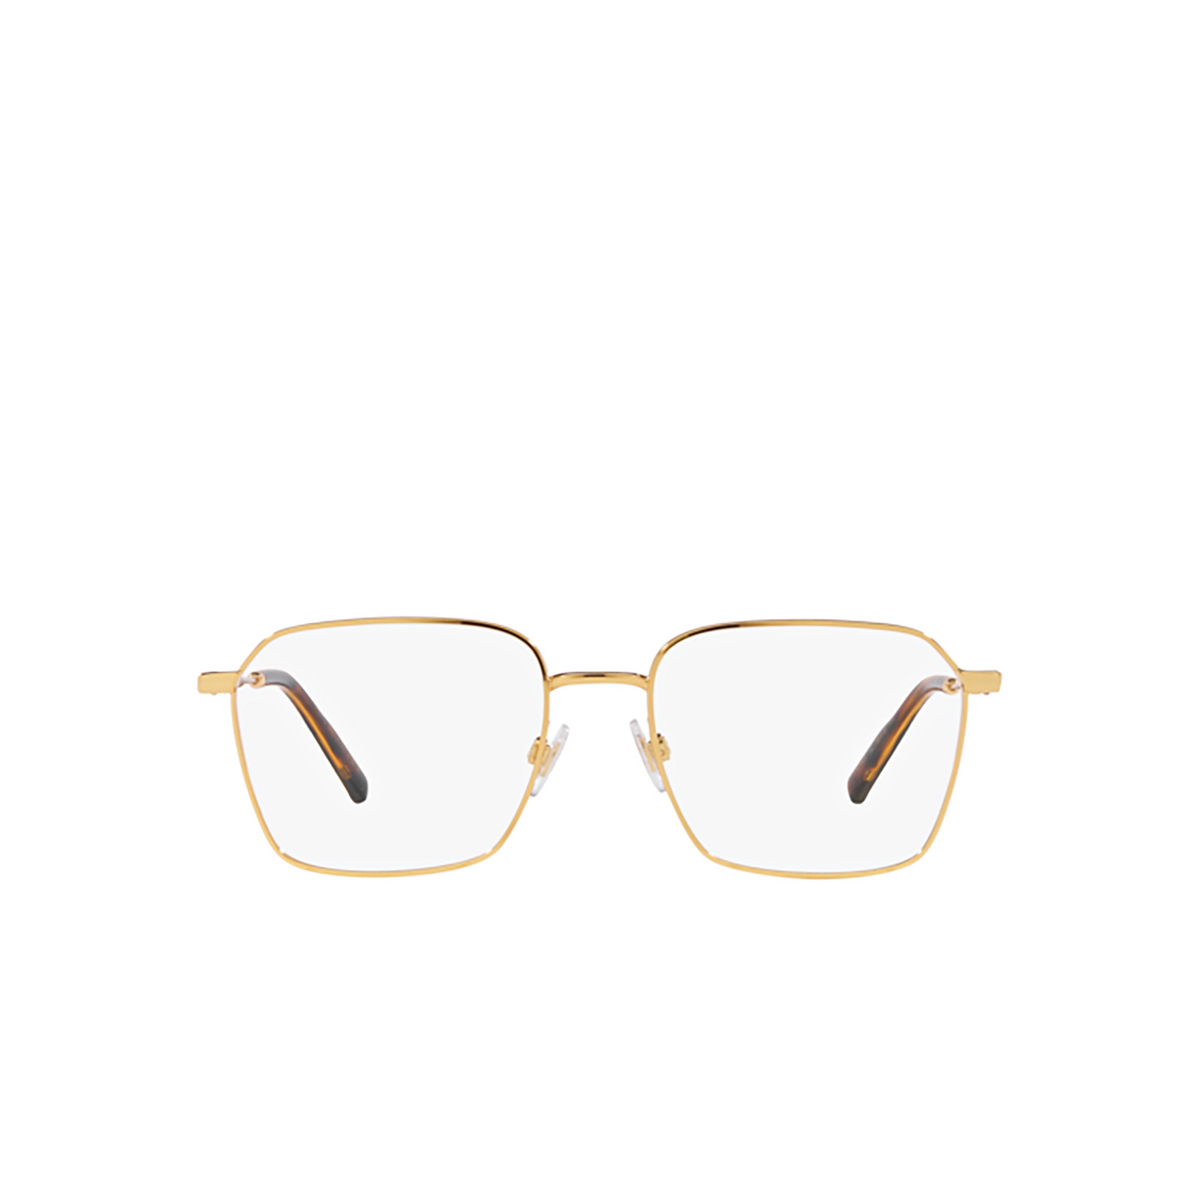 Dolce & Gabbana DG1350 Eyeglasses 02 Gold - front view